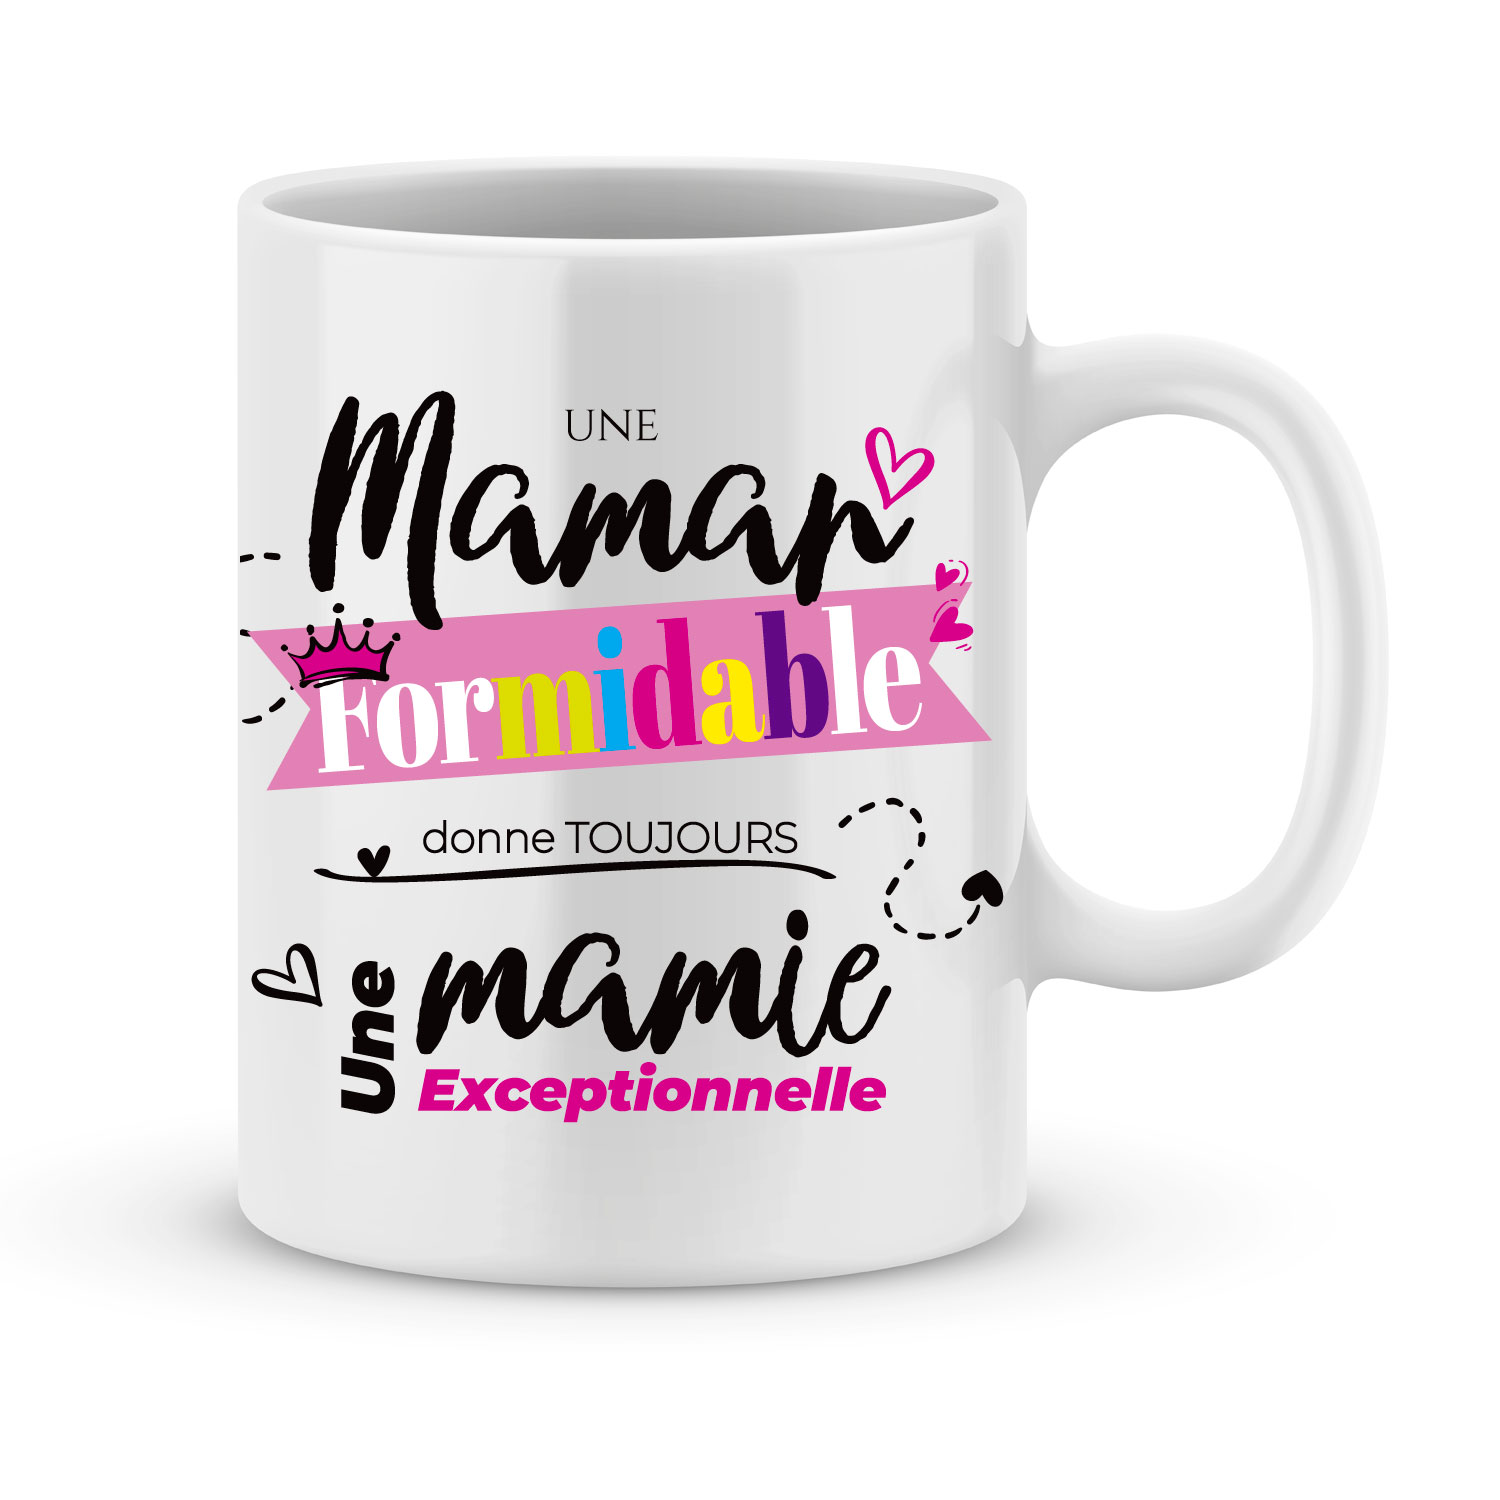 Le Mug de la Super Mamie - Cadeau grand-mère